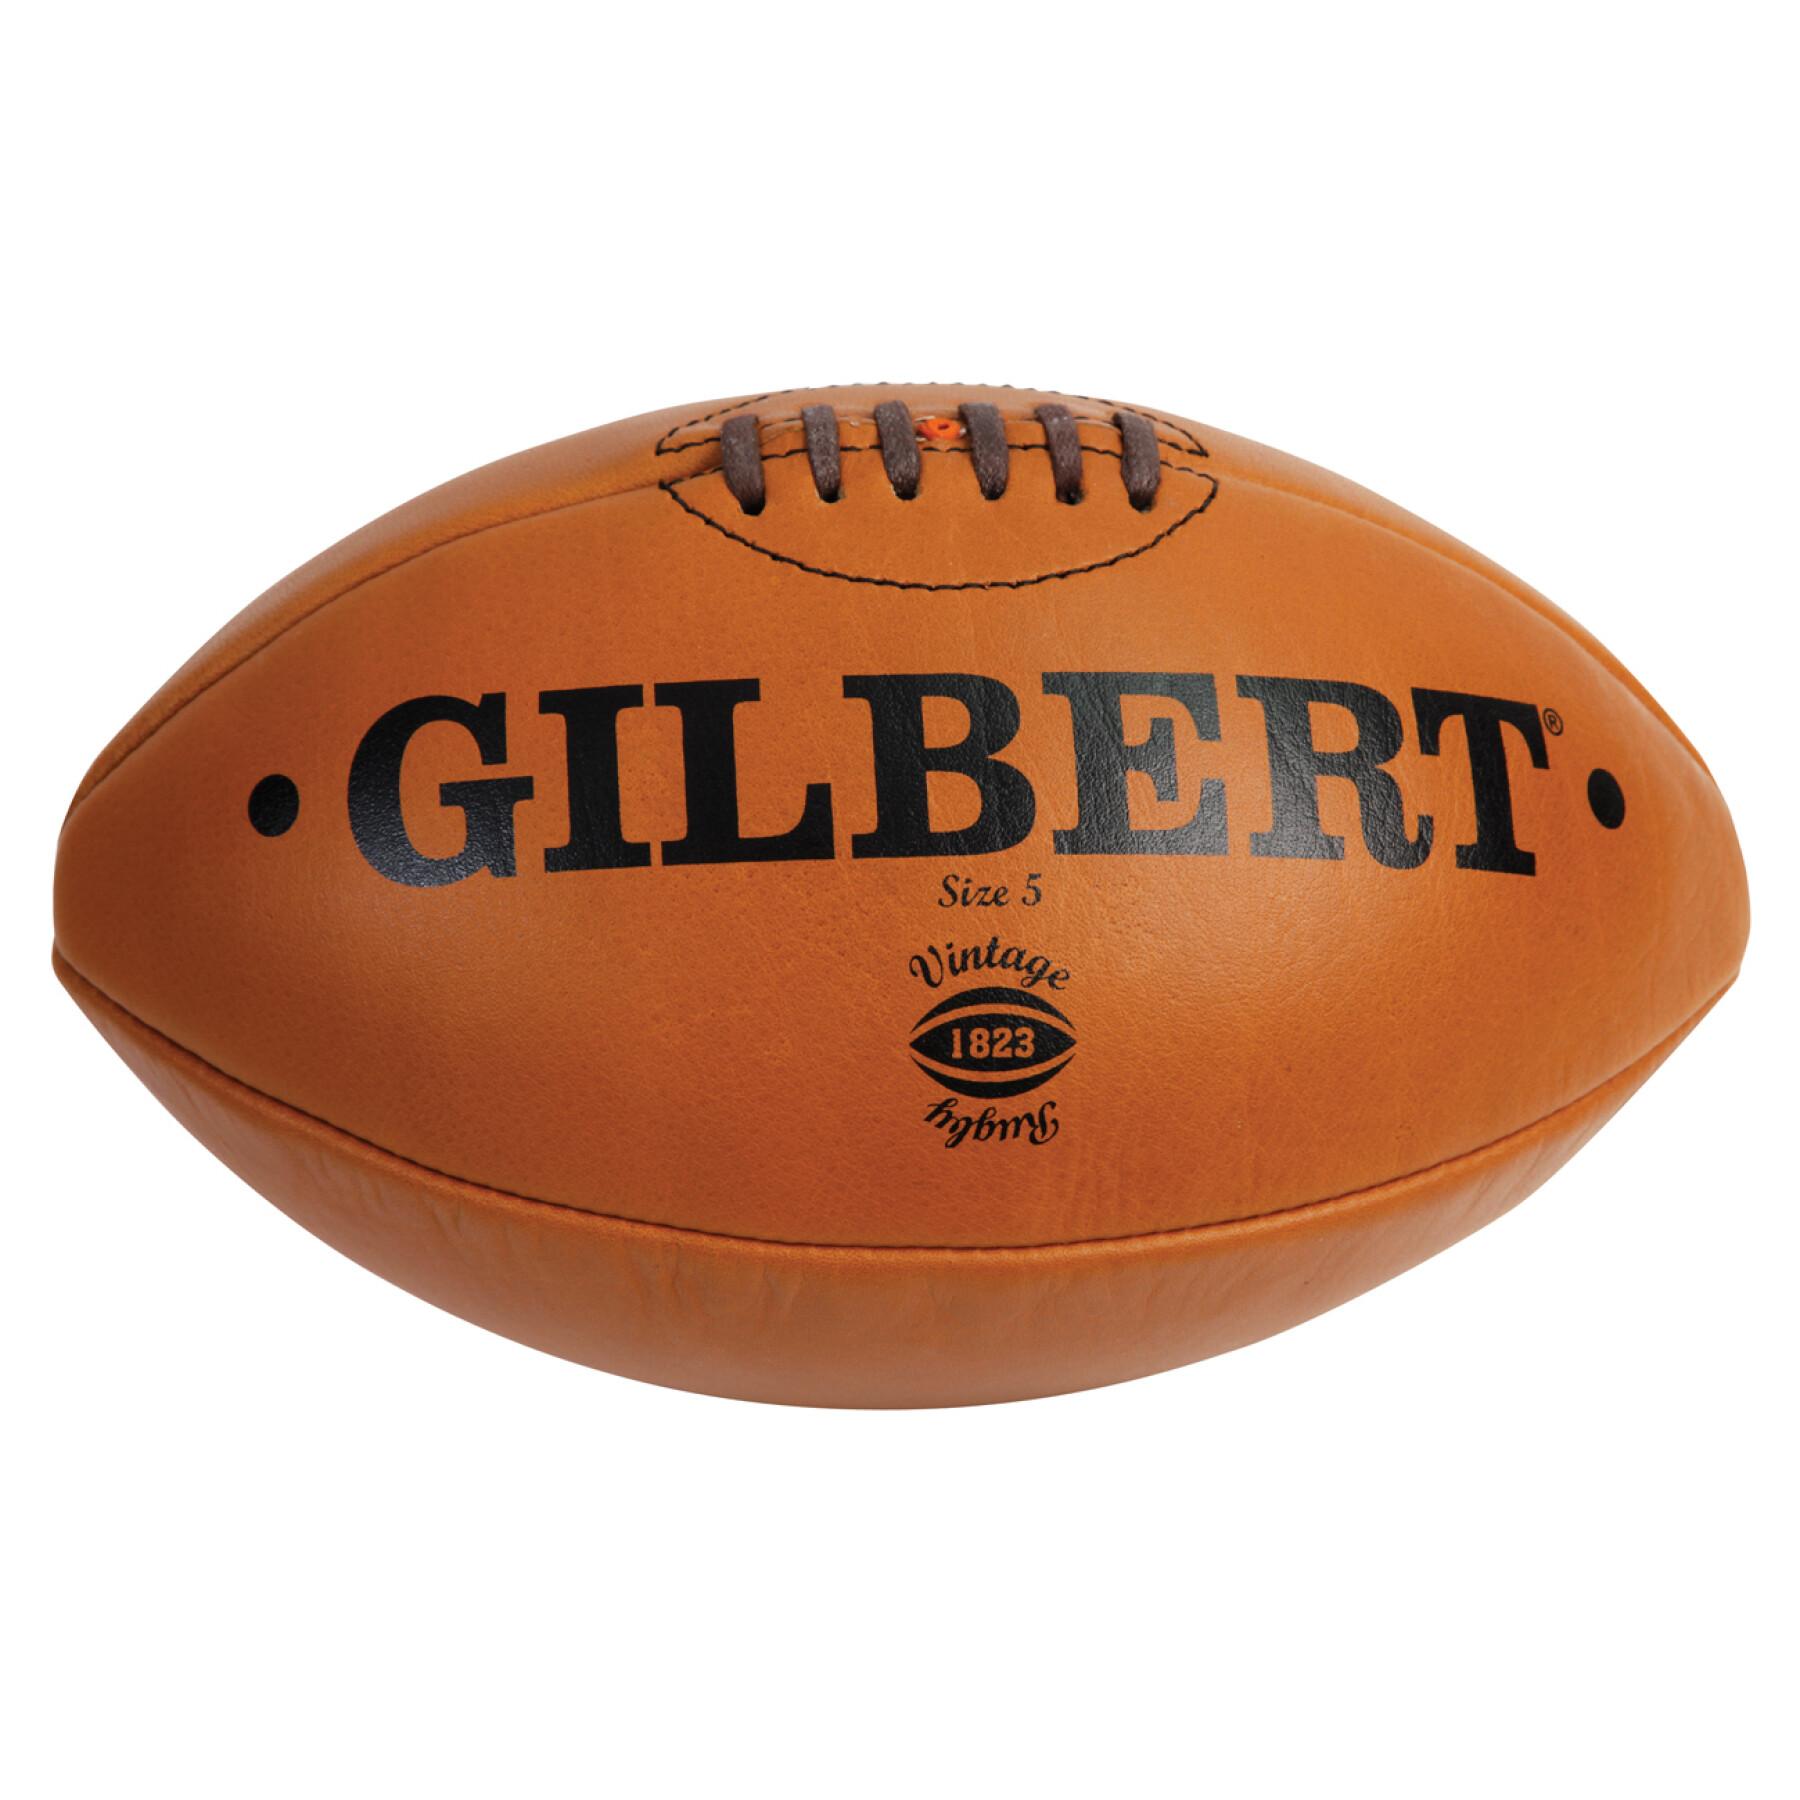 Vintage Leder Rugby-Ball Gilbert (taille 5)